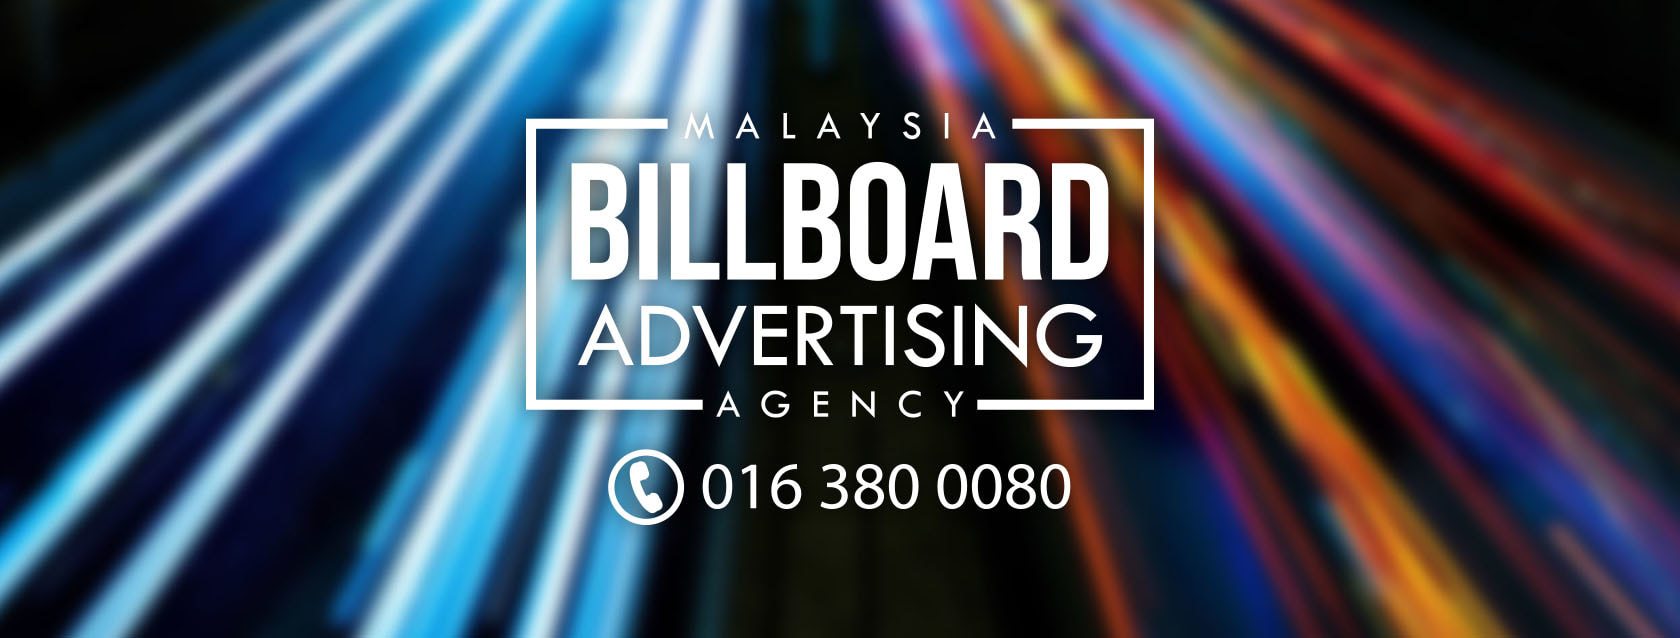 Malaysia Outdoor Billboard Advertising Agency